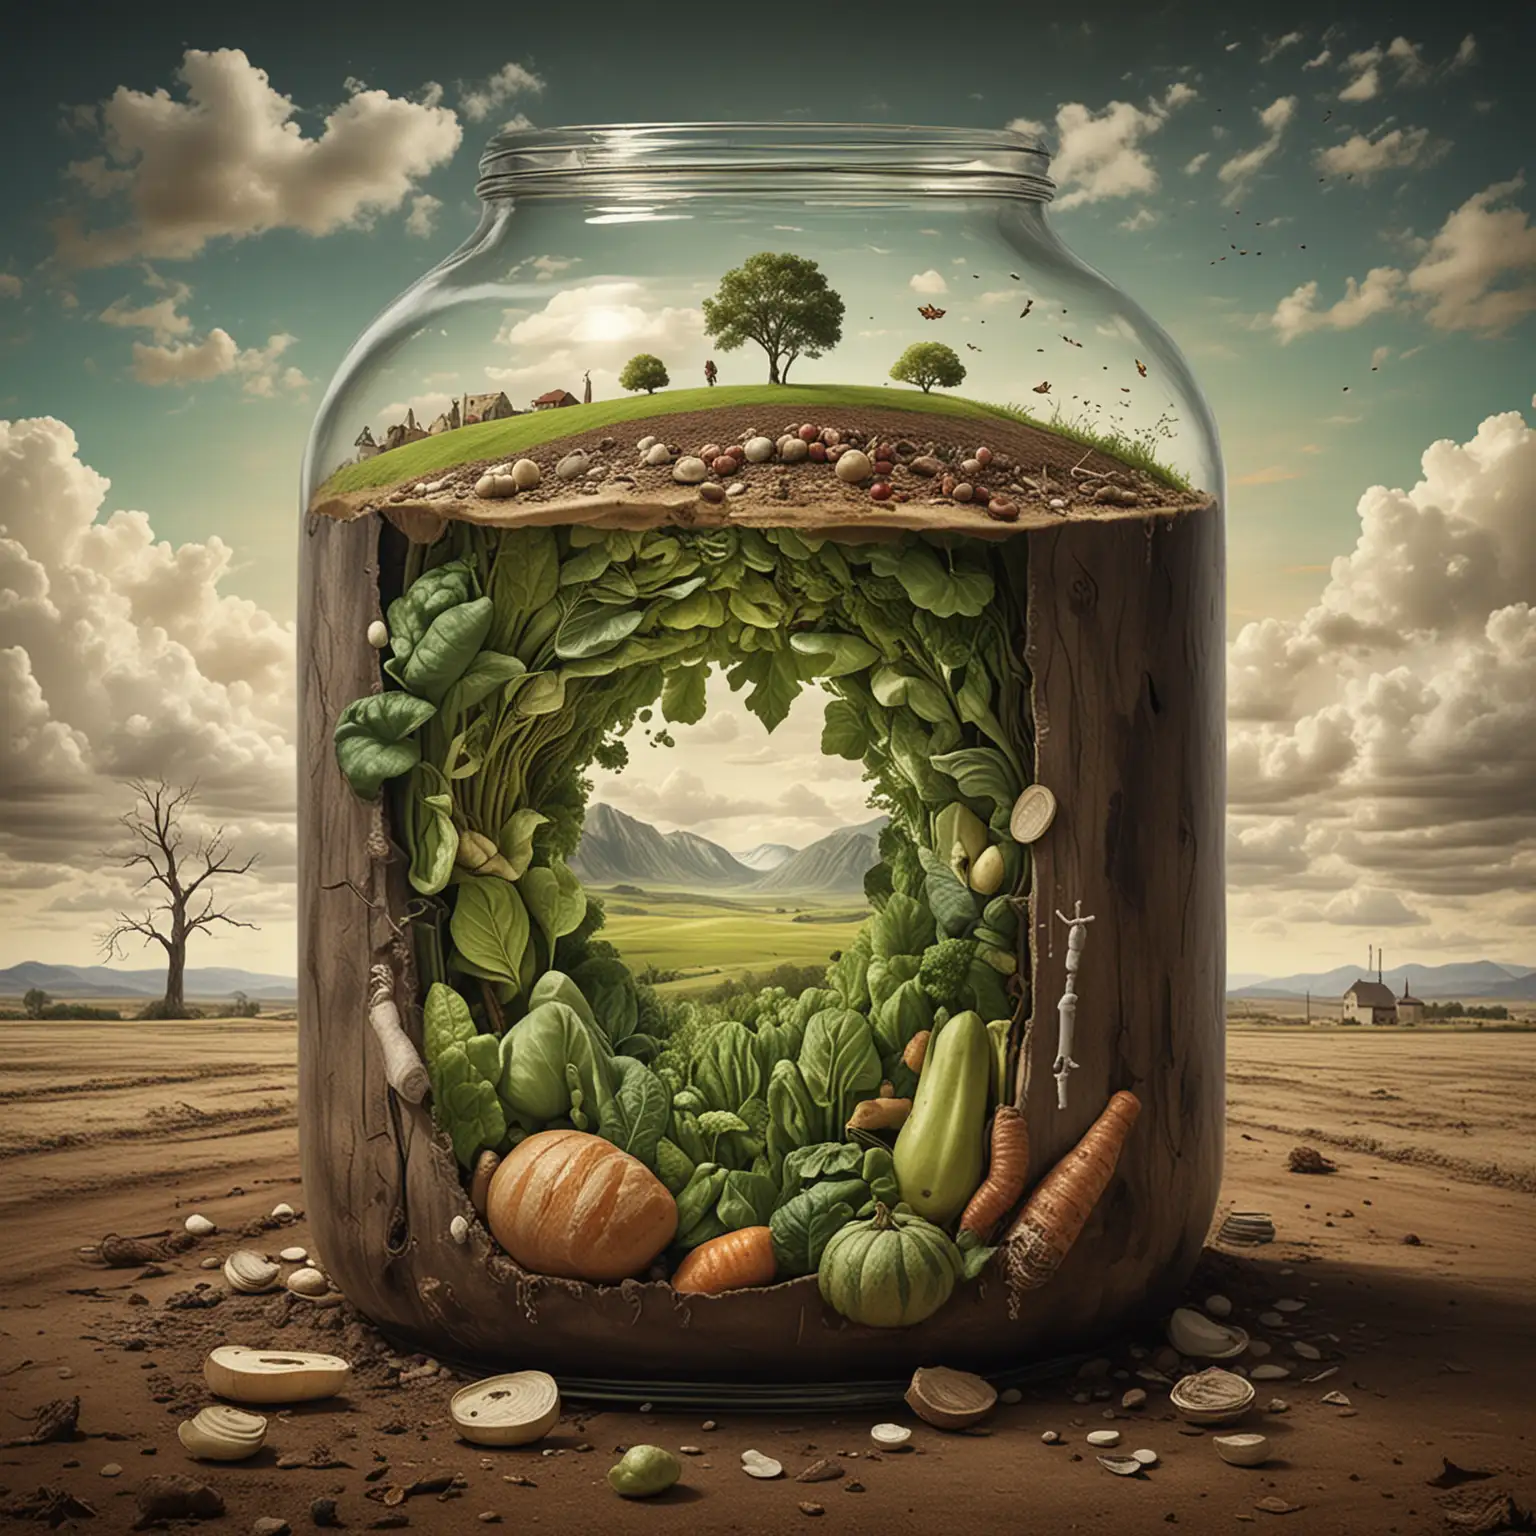 surrealist artwork showing environmental benefits of fermentation (reduce waste, preserve food)